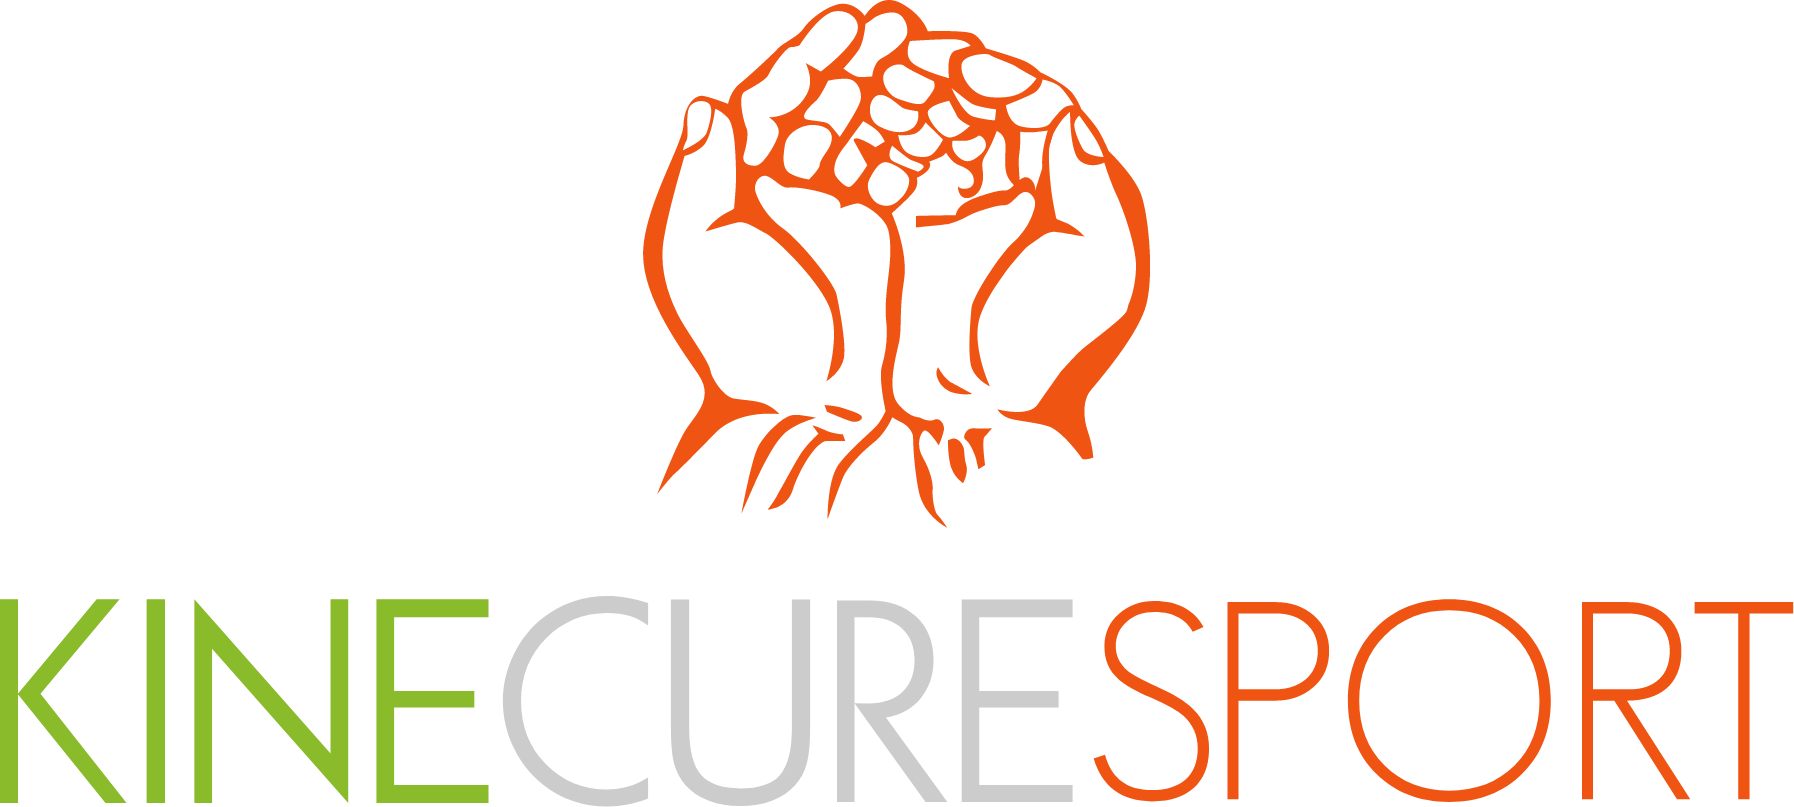 logo Kinecure sport Png